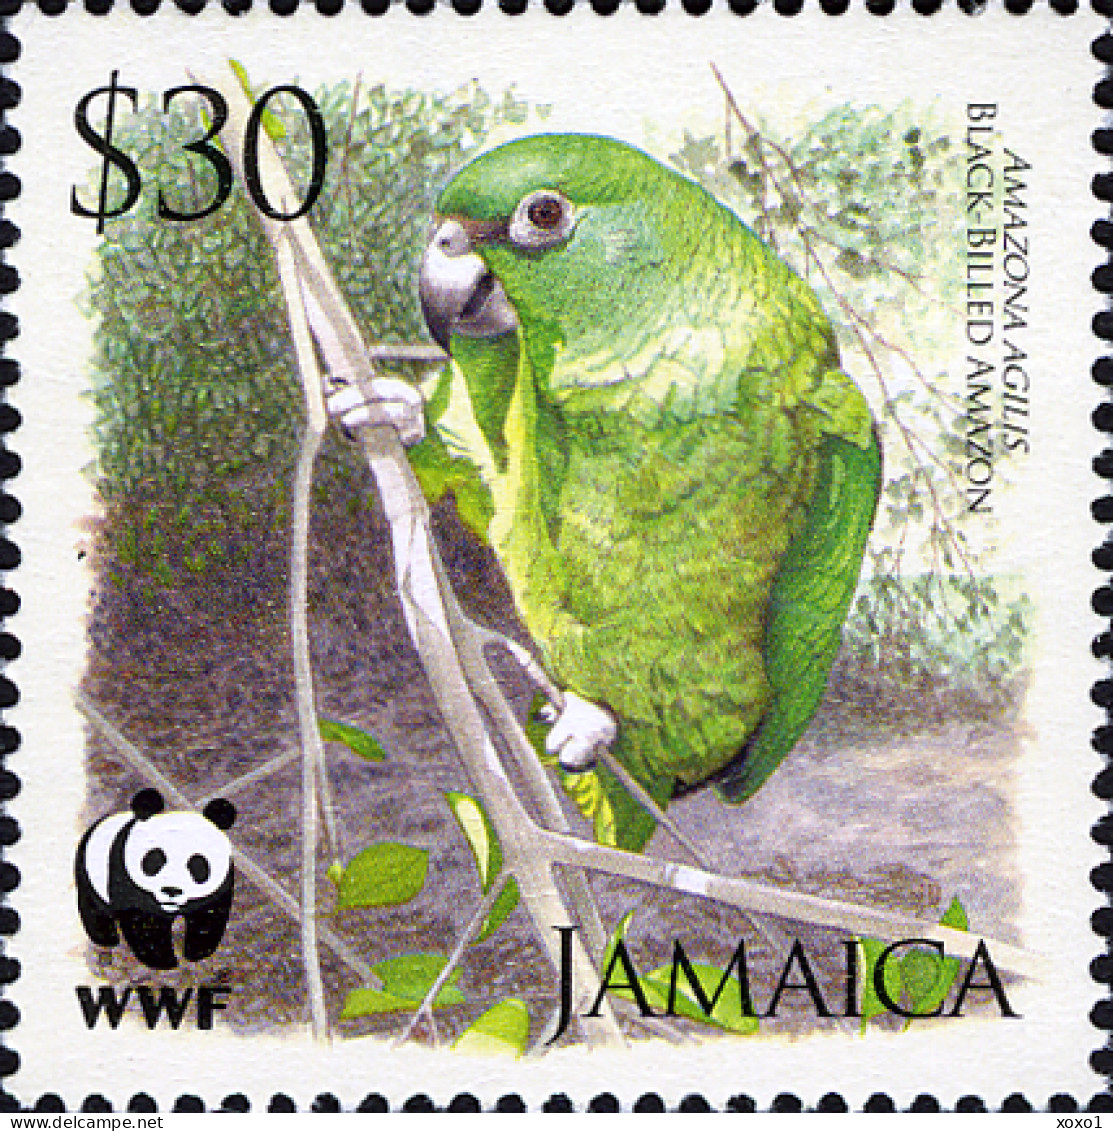 Jamaica 2006 MiNr. 1122 - 1125 Jamaika WWF Birds, Parrots, Black-billed Amazon 4v MNH** 3.20 € - Perroquets & Tropicaux